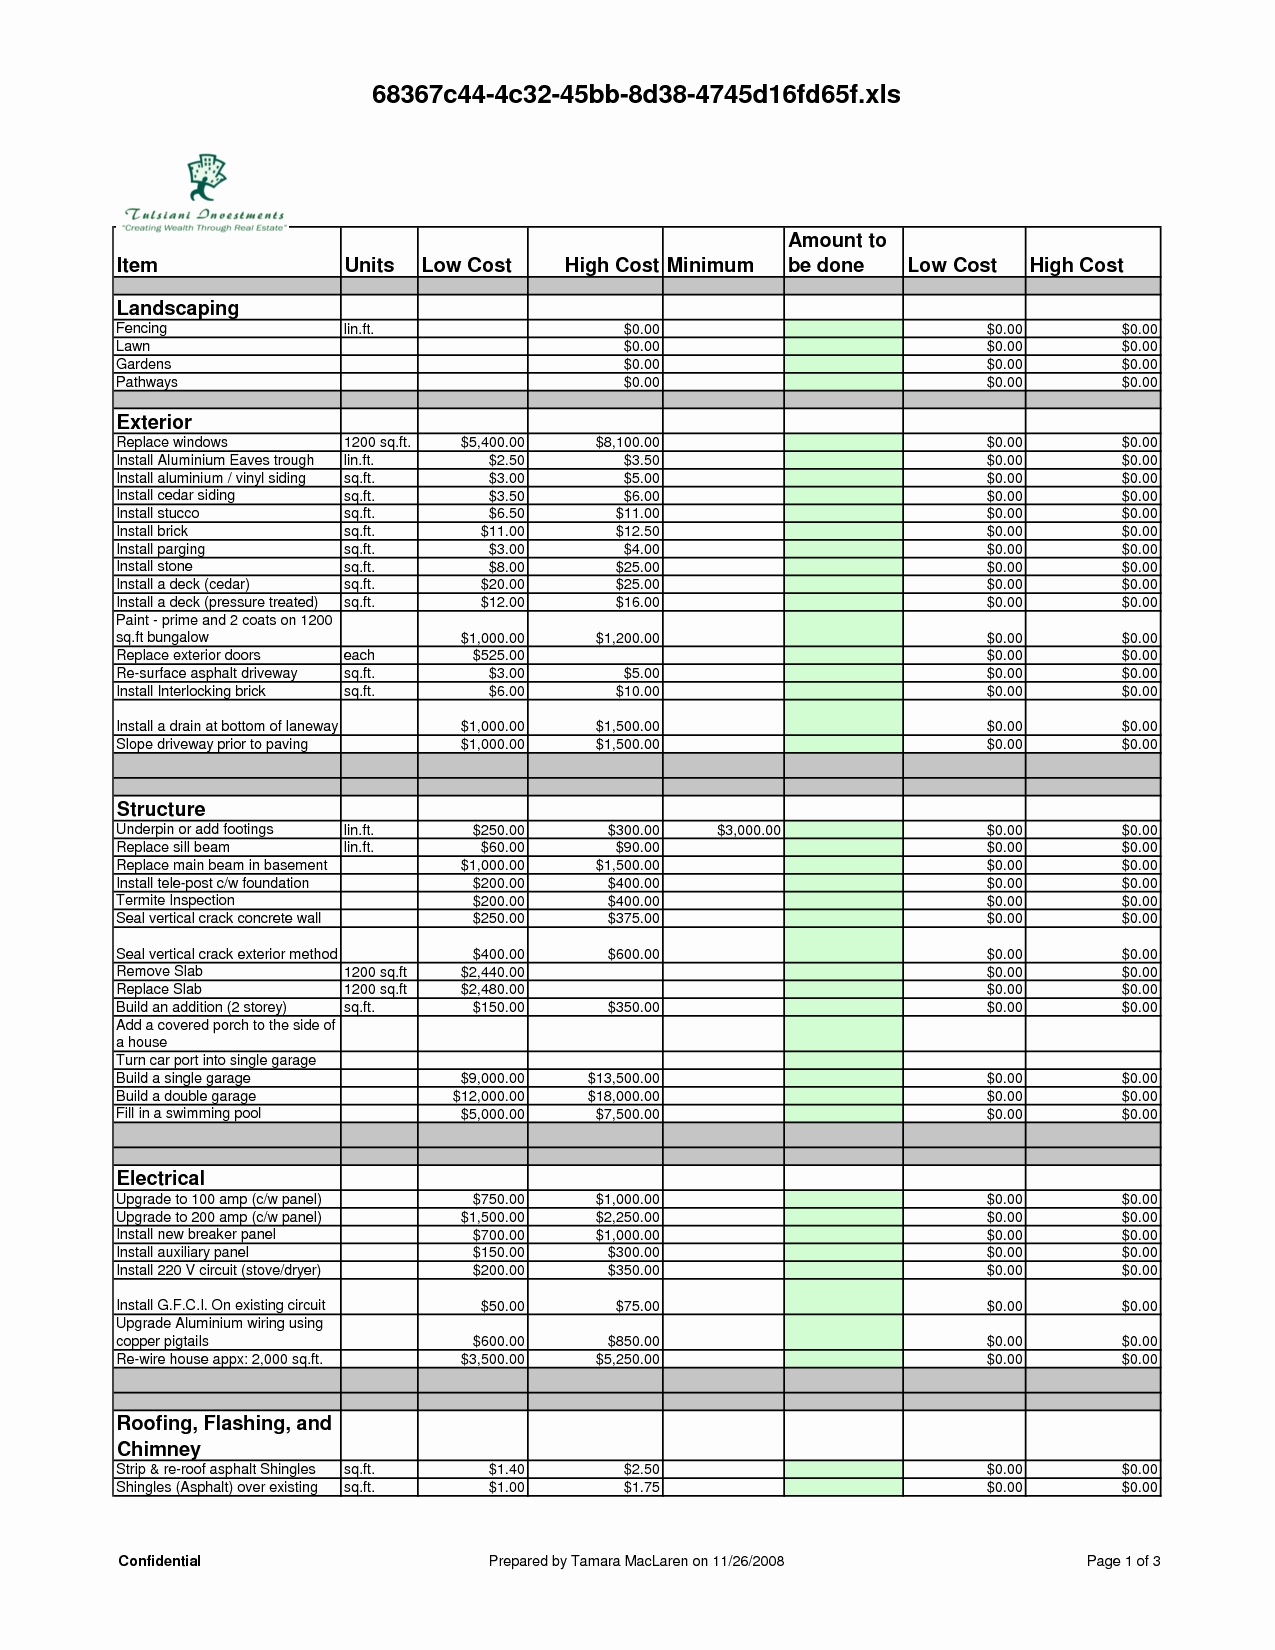 Free Construction Estimate Template Excel Unique Cost Estimate Form inside Construction Estimate Form Excel